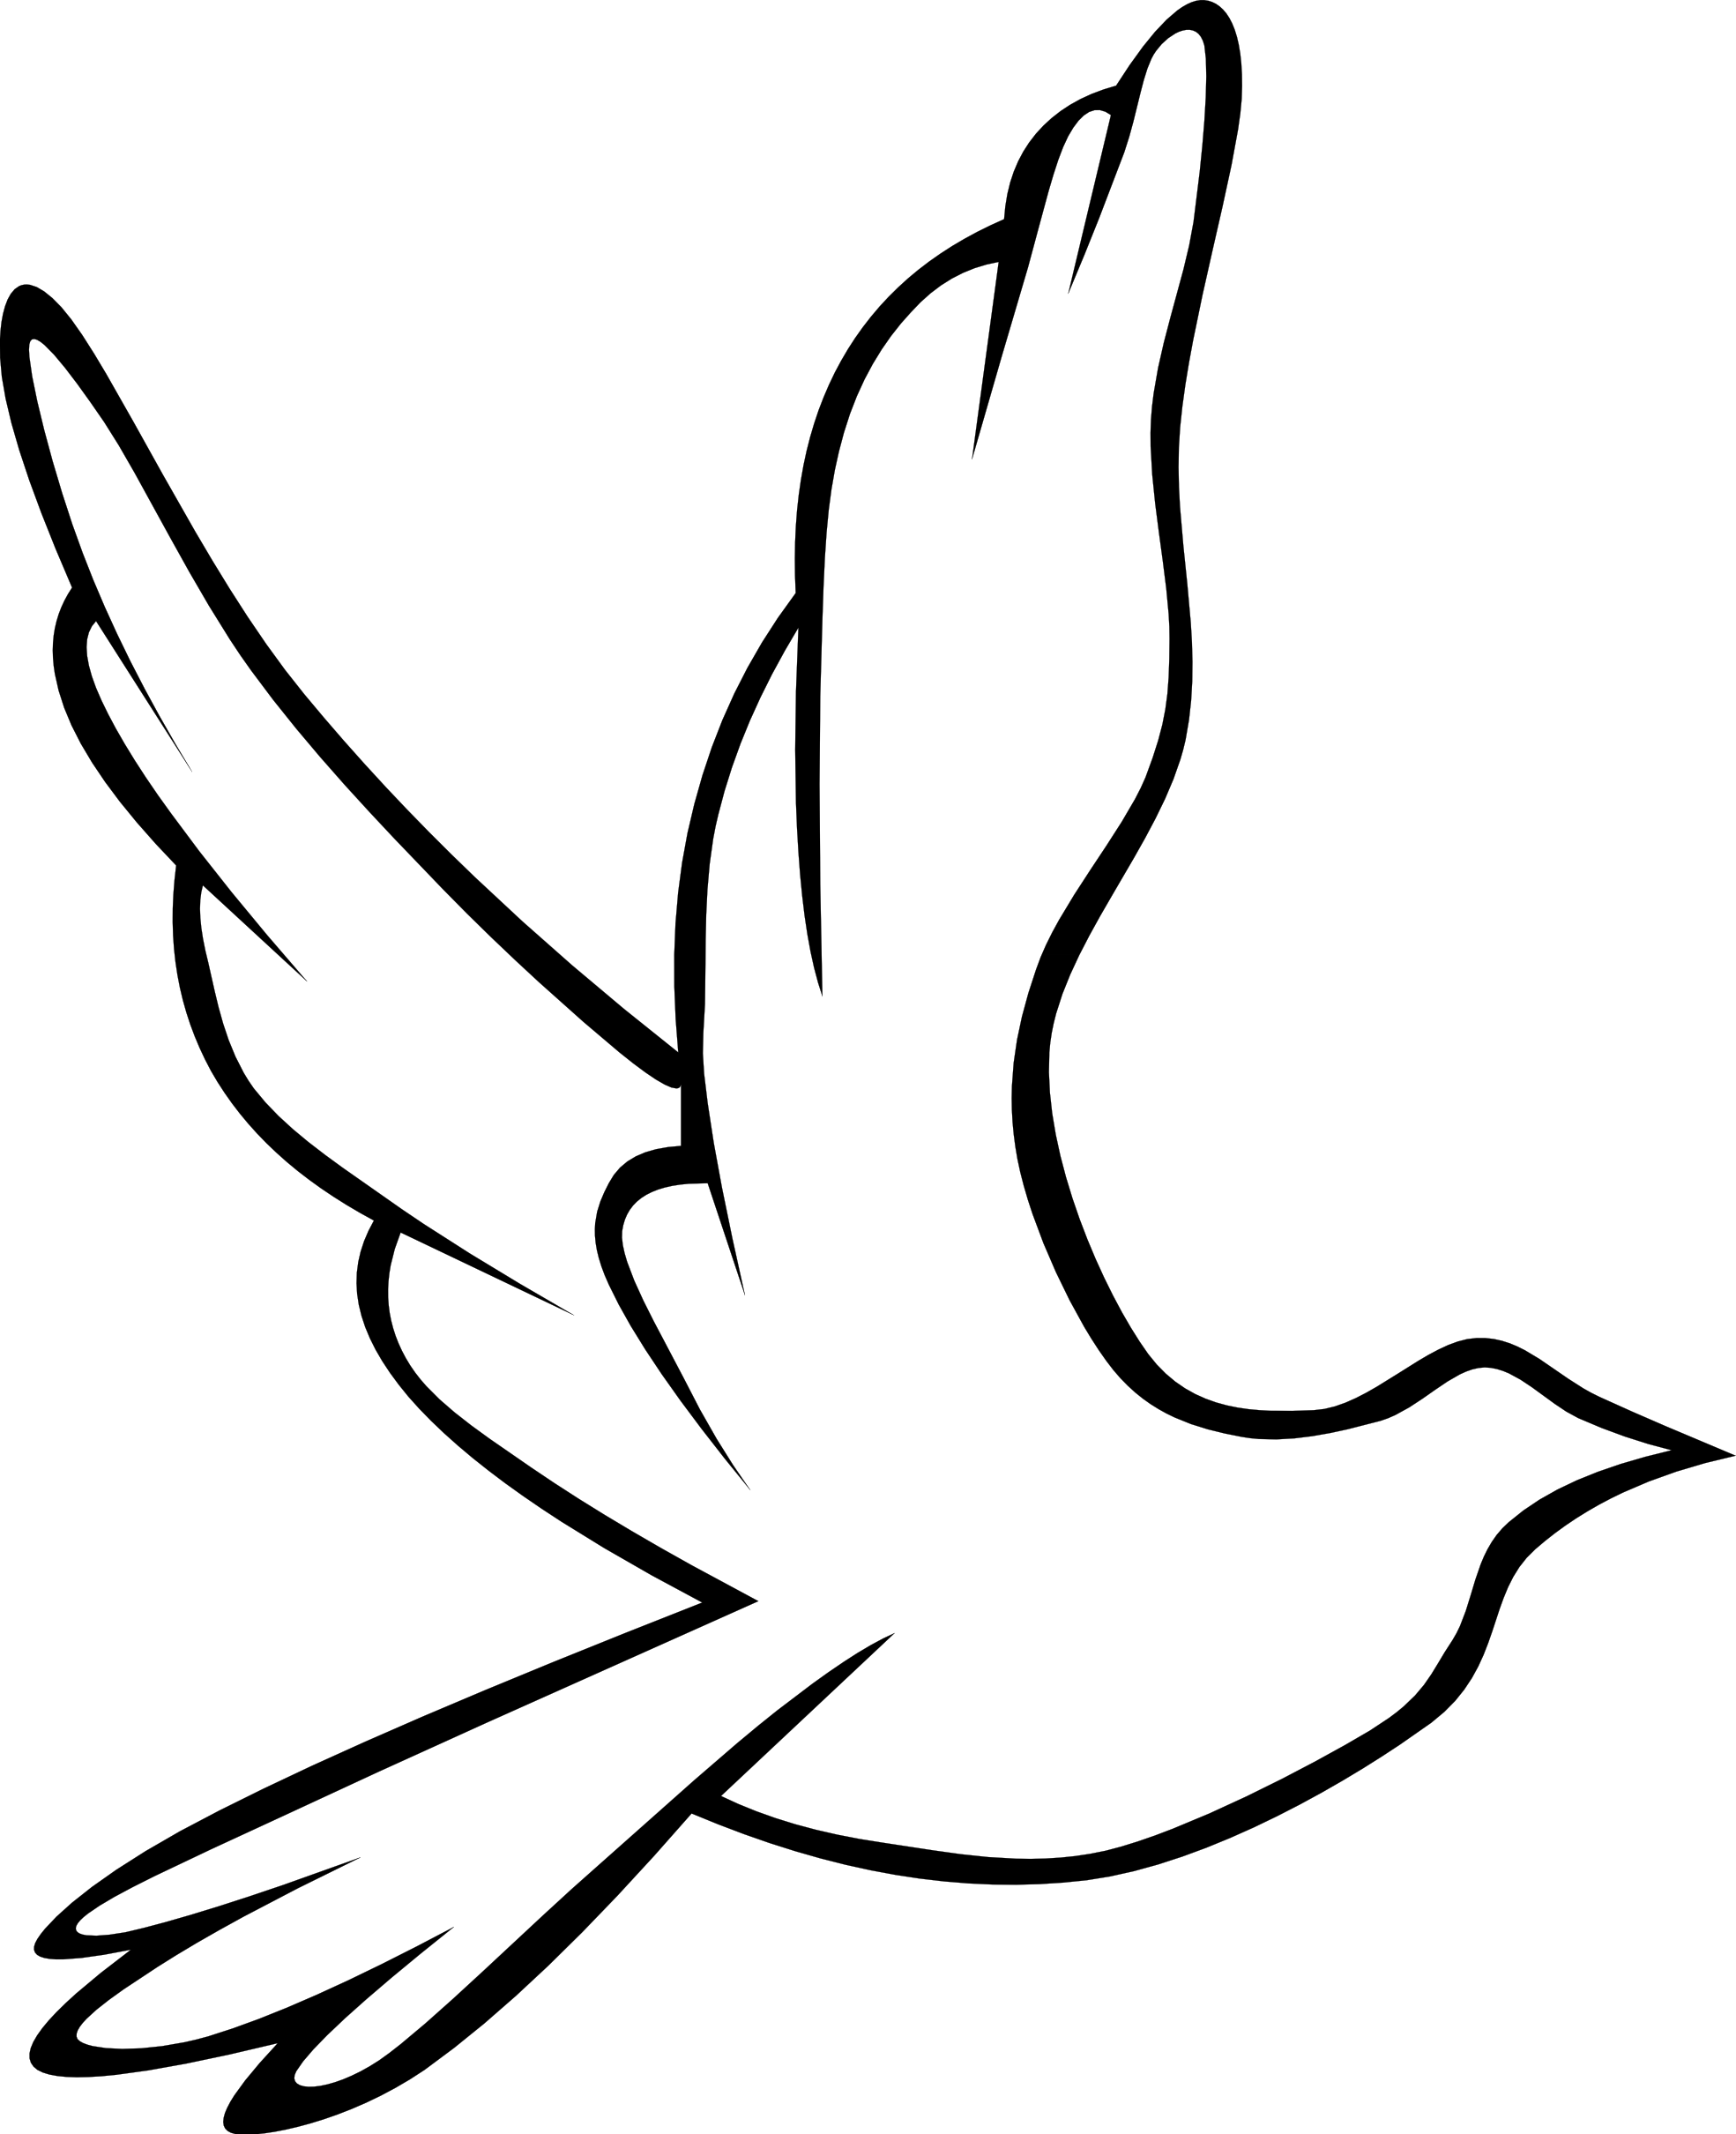 clipartist.net » Clip Art » peace dove 1 94 black white line art 